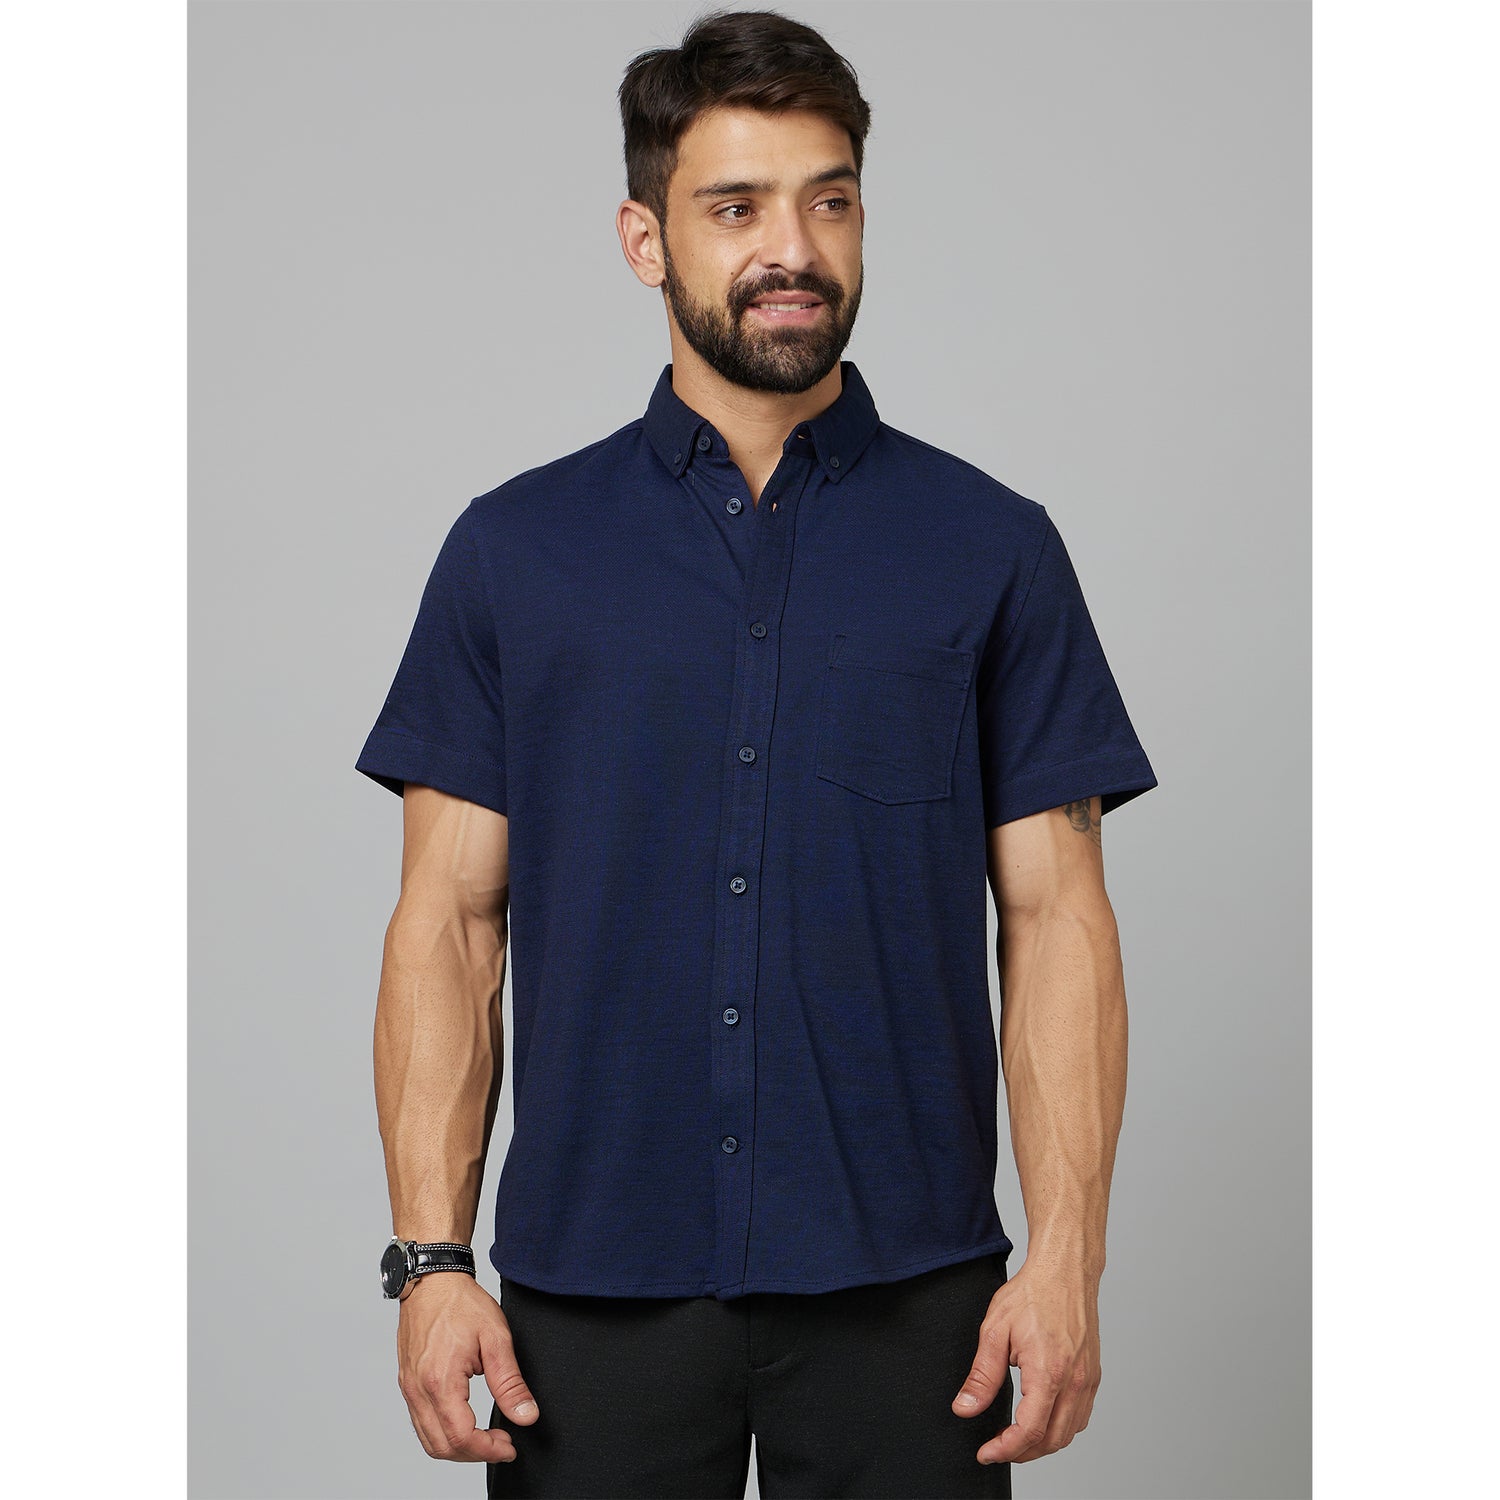 Navy Blue Classic Knit Slim Fit Cotton Casual Shirt (BARIK)